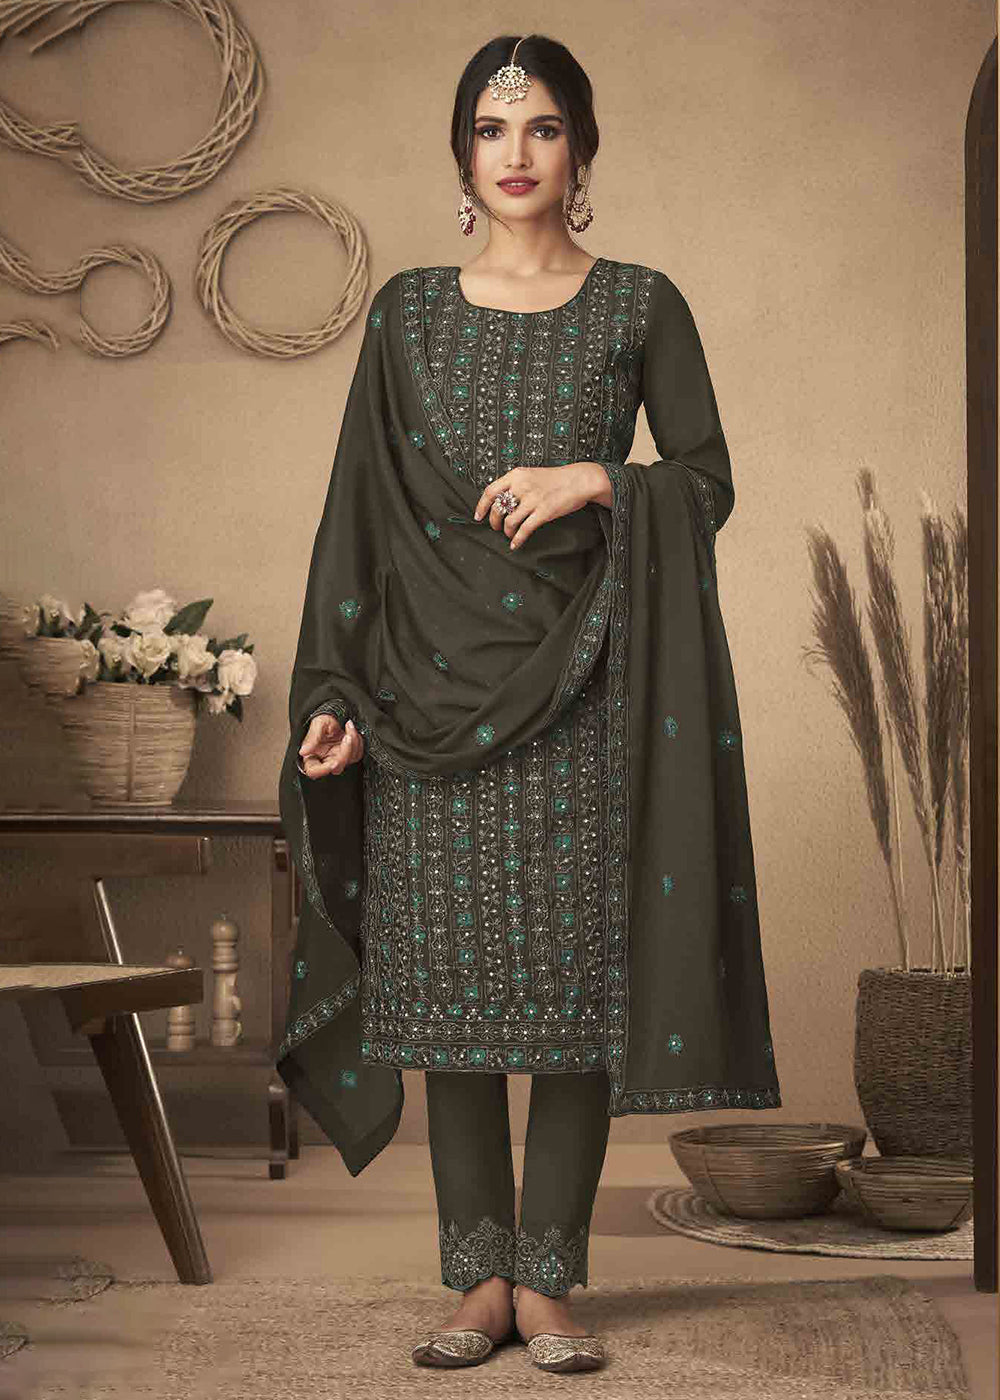 Buy Now Dark Green Cording & Swarovski Embroidered Trendy Salwar Suit Online in USA, UK, Canada, Germany, Australia & Worldwide at Empress Clothing.